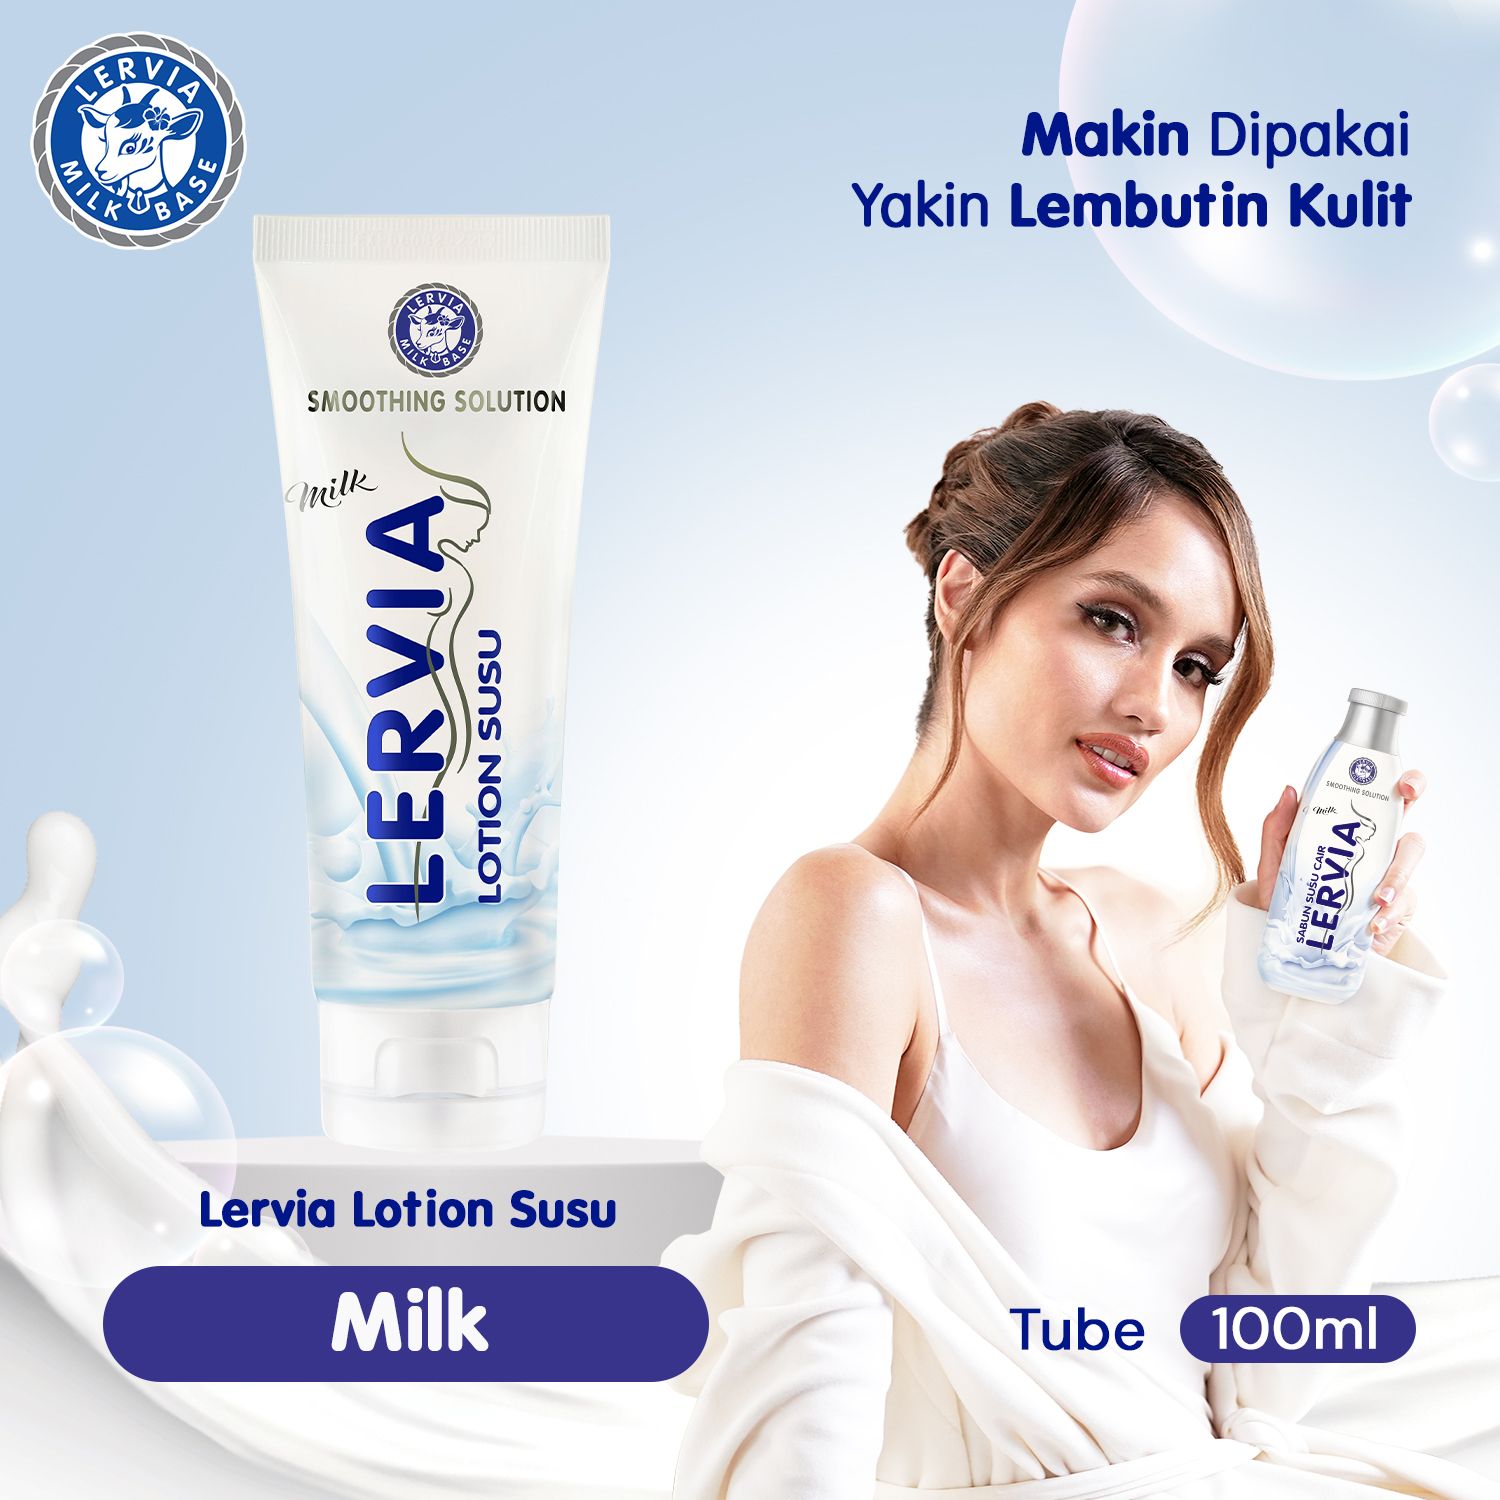 LERVIA Lotion Susu Milk 100ml tube - 1